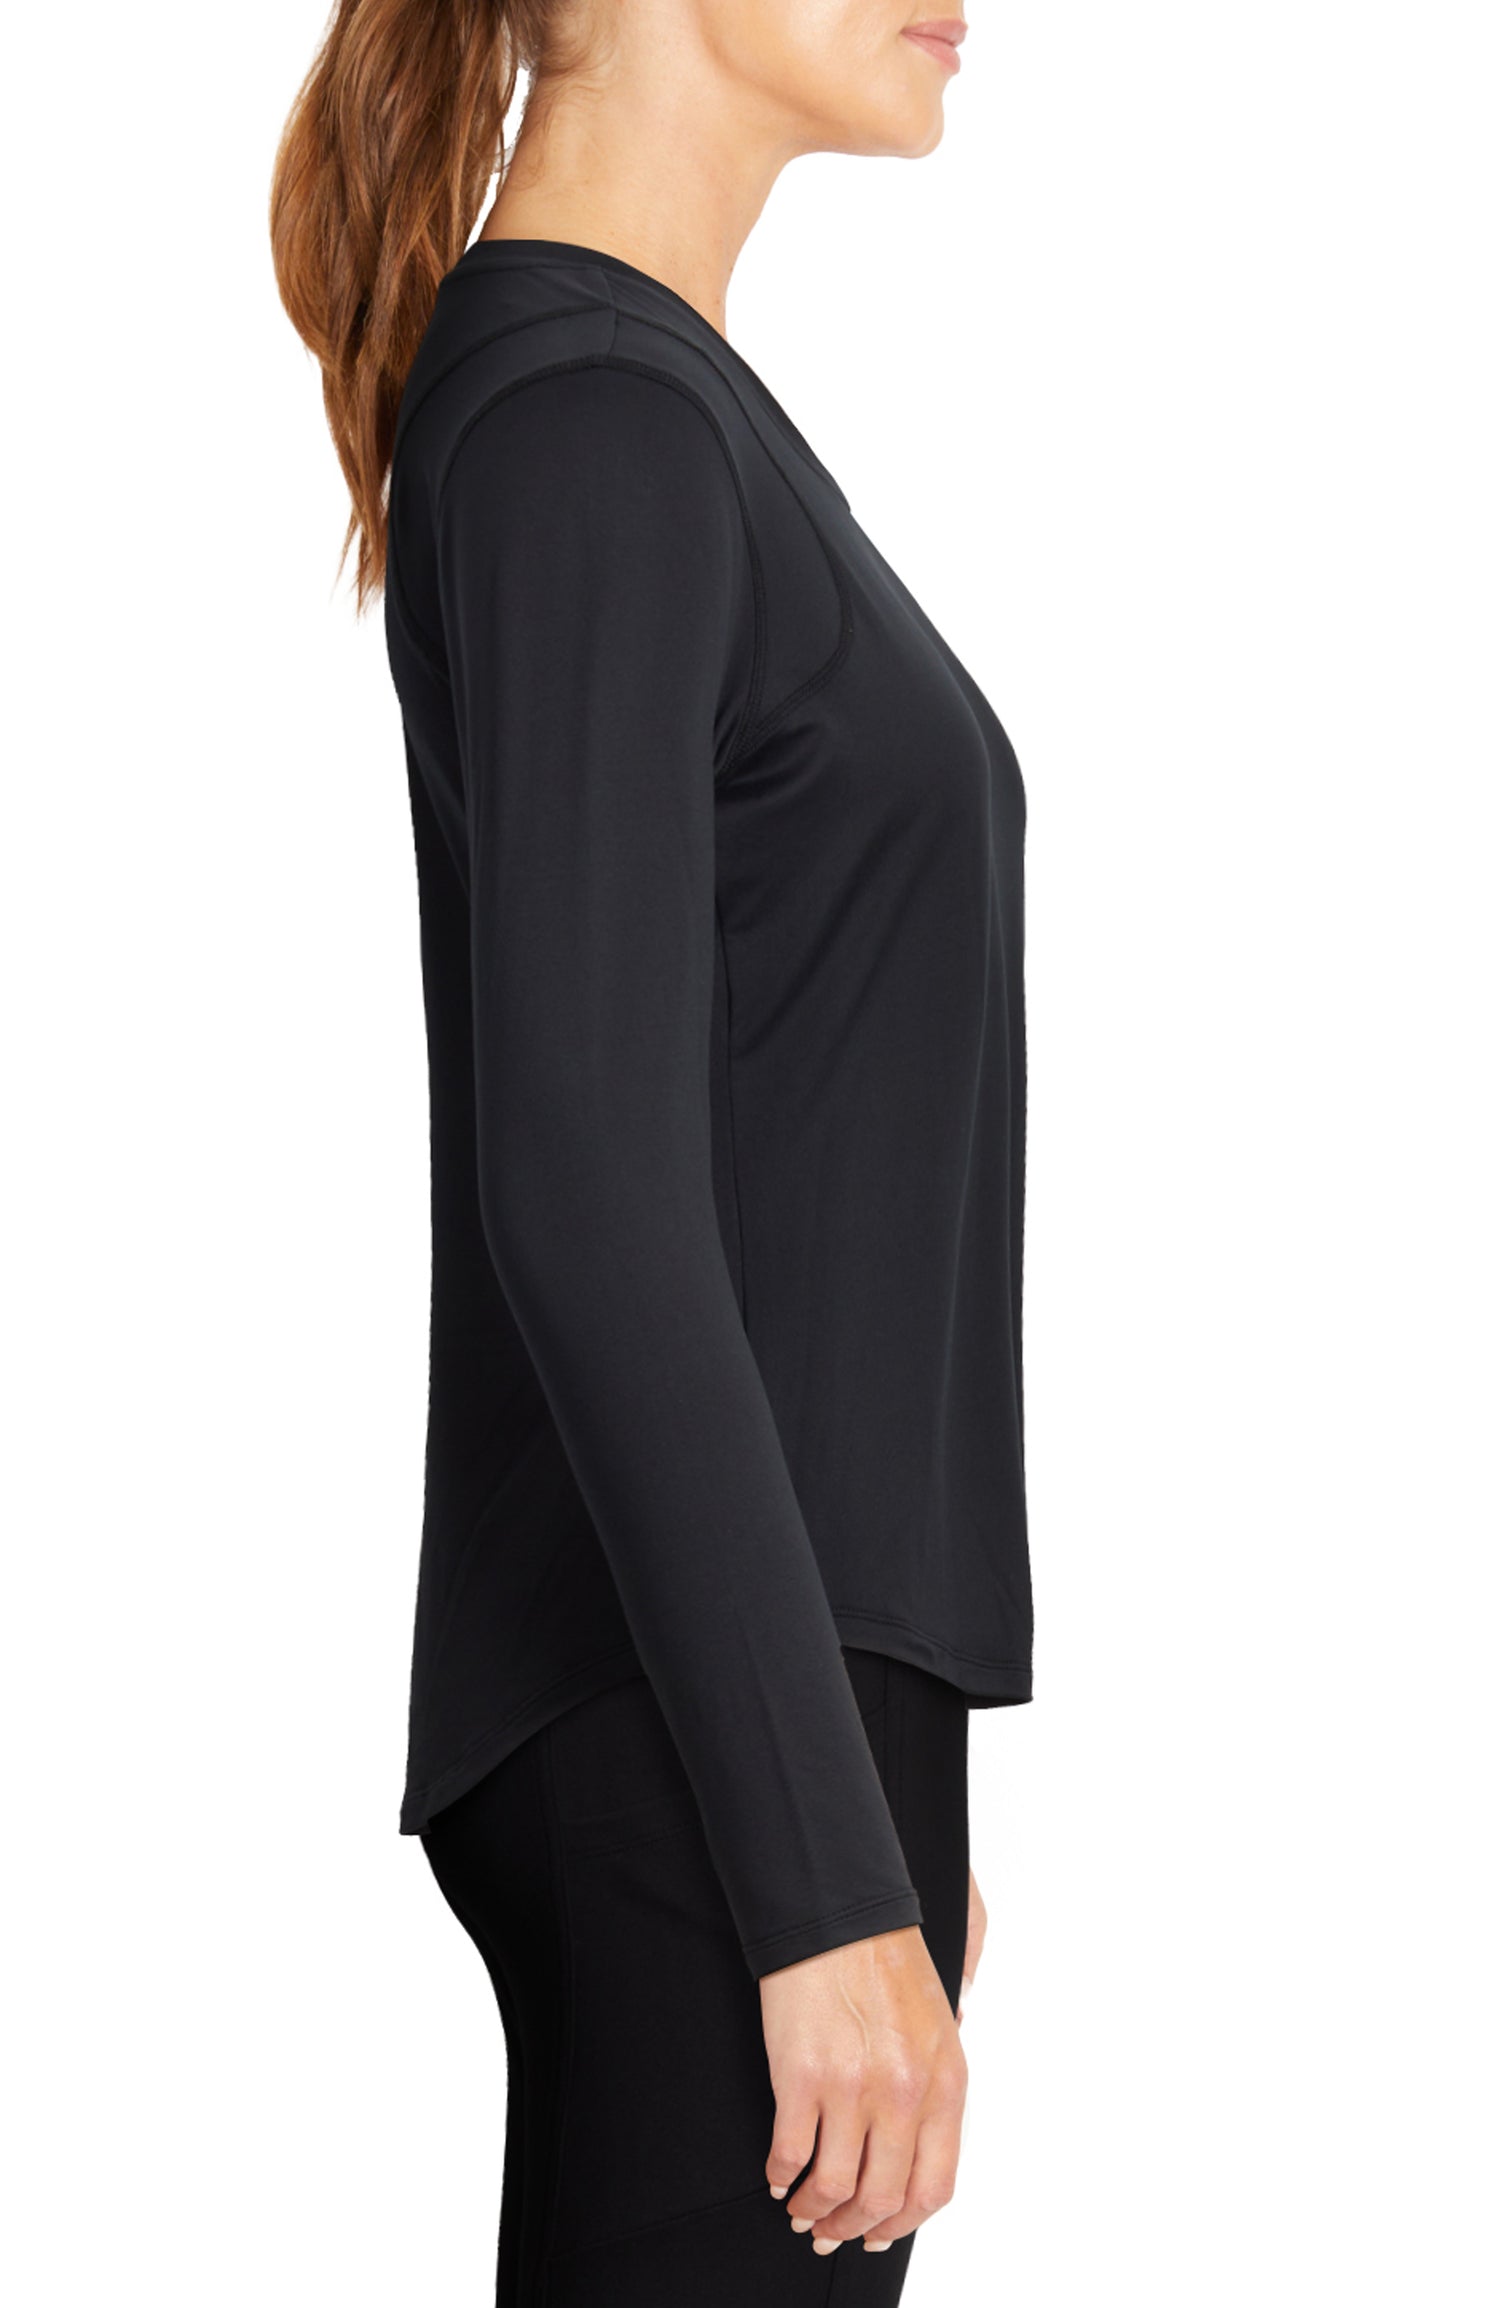 Victoria Long Sleeve (Black)